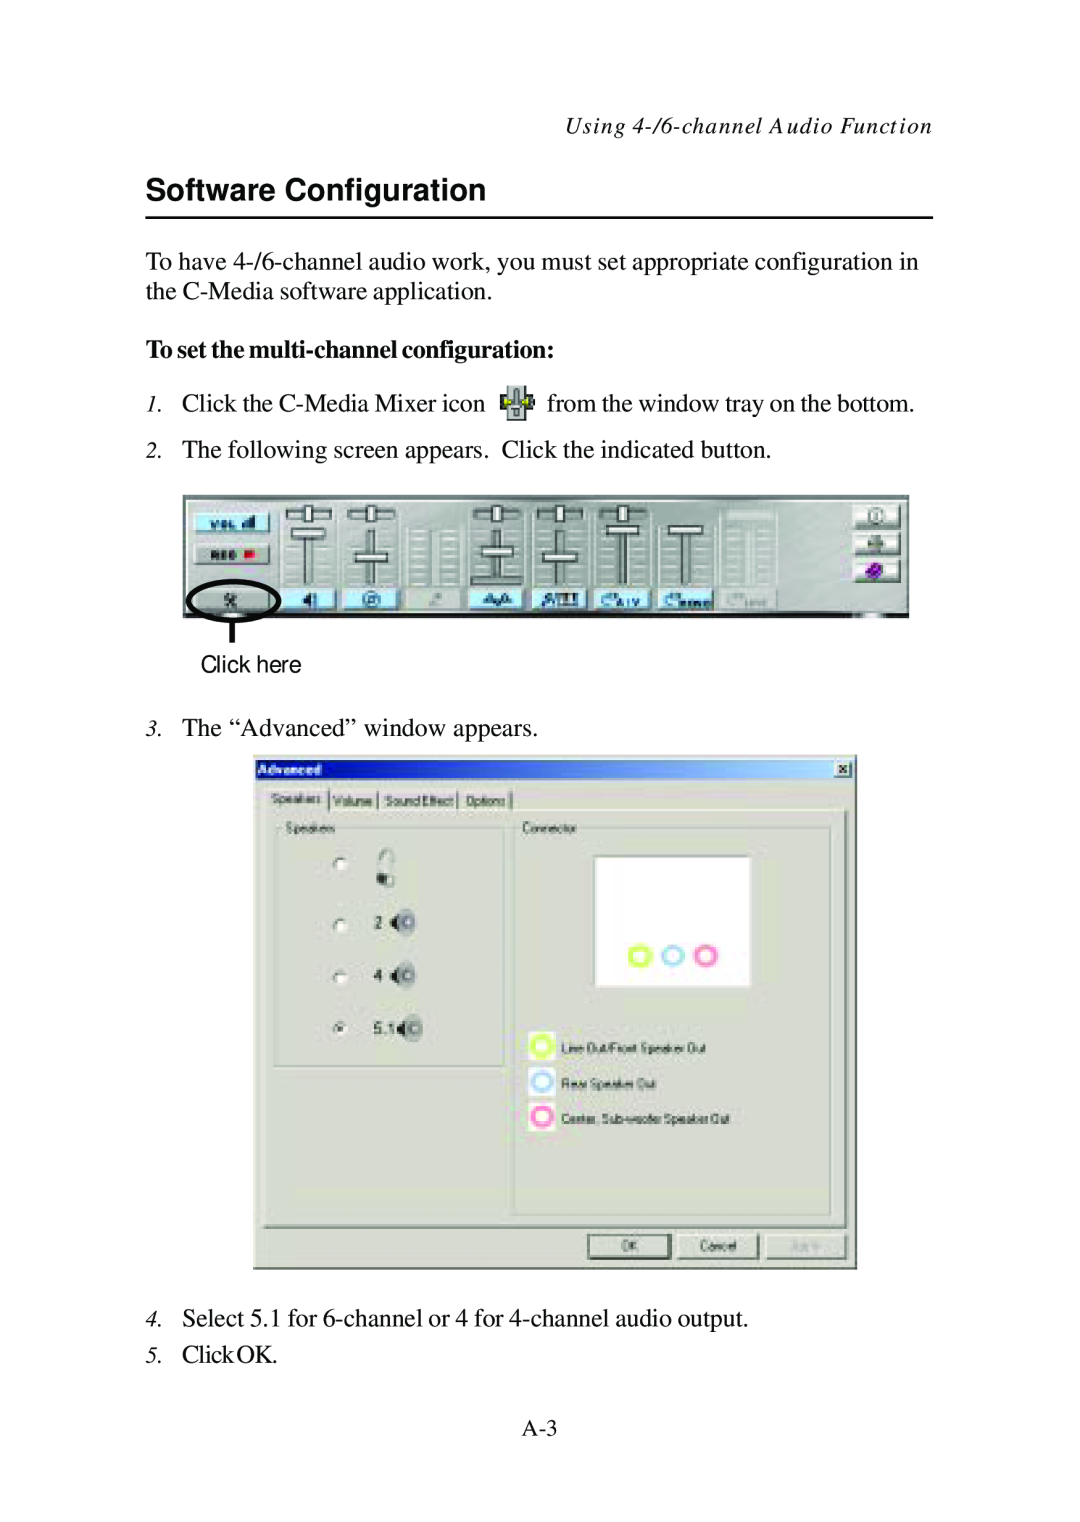 Premio Computer Aries/Centella manual Software Configuration, To set the multi-channel configuration, Click here 